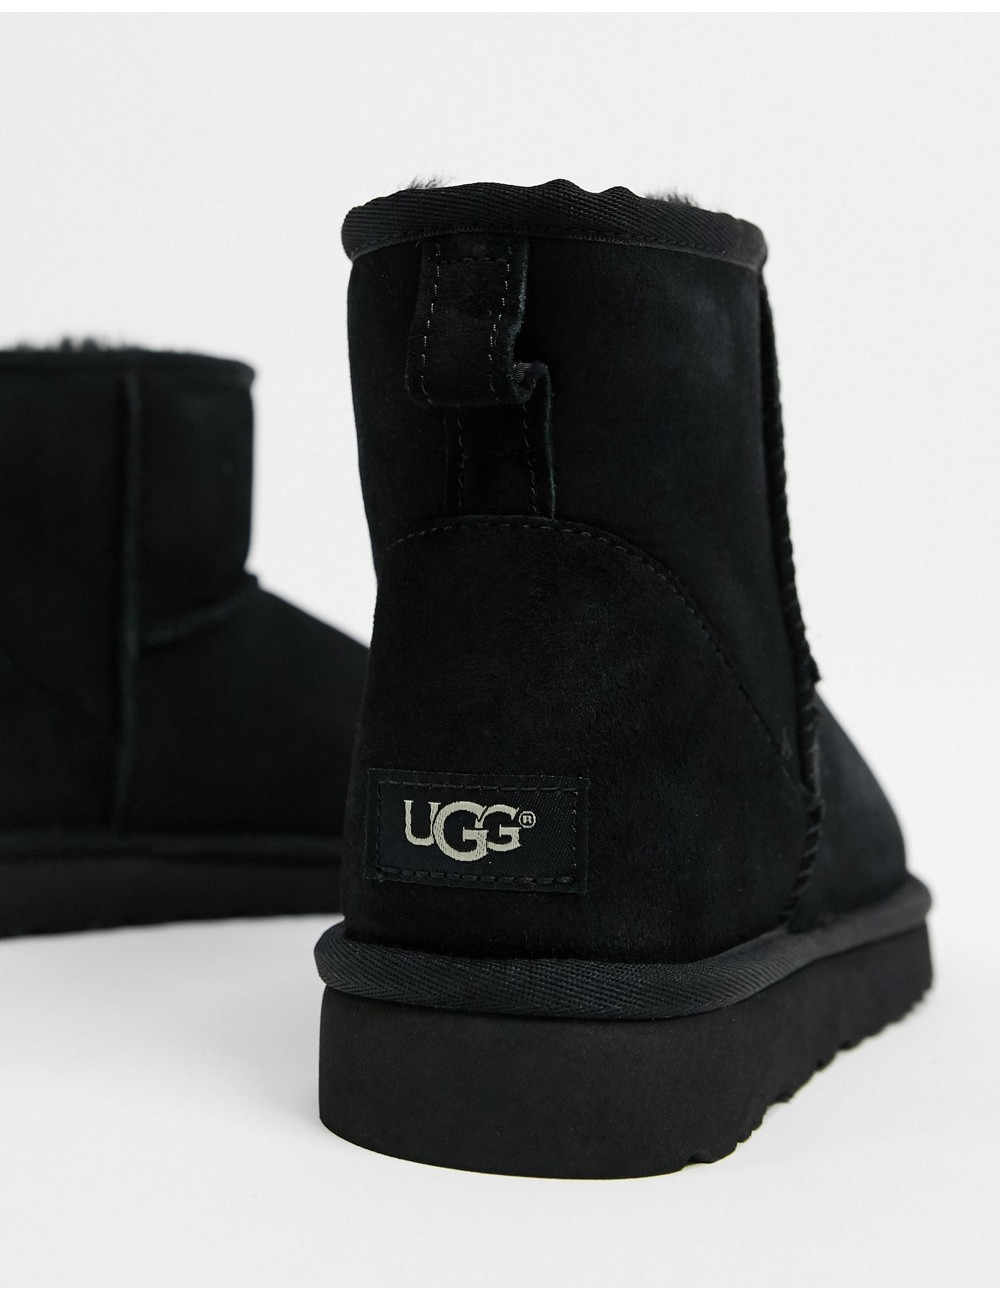 UGG classic mini boots in...